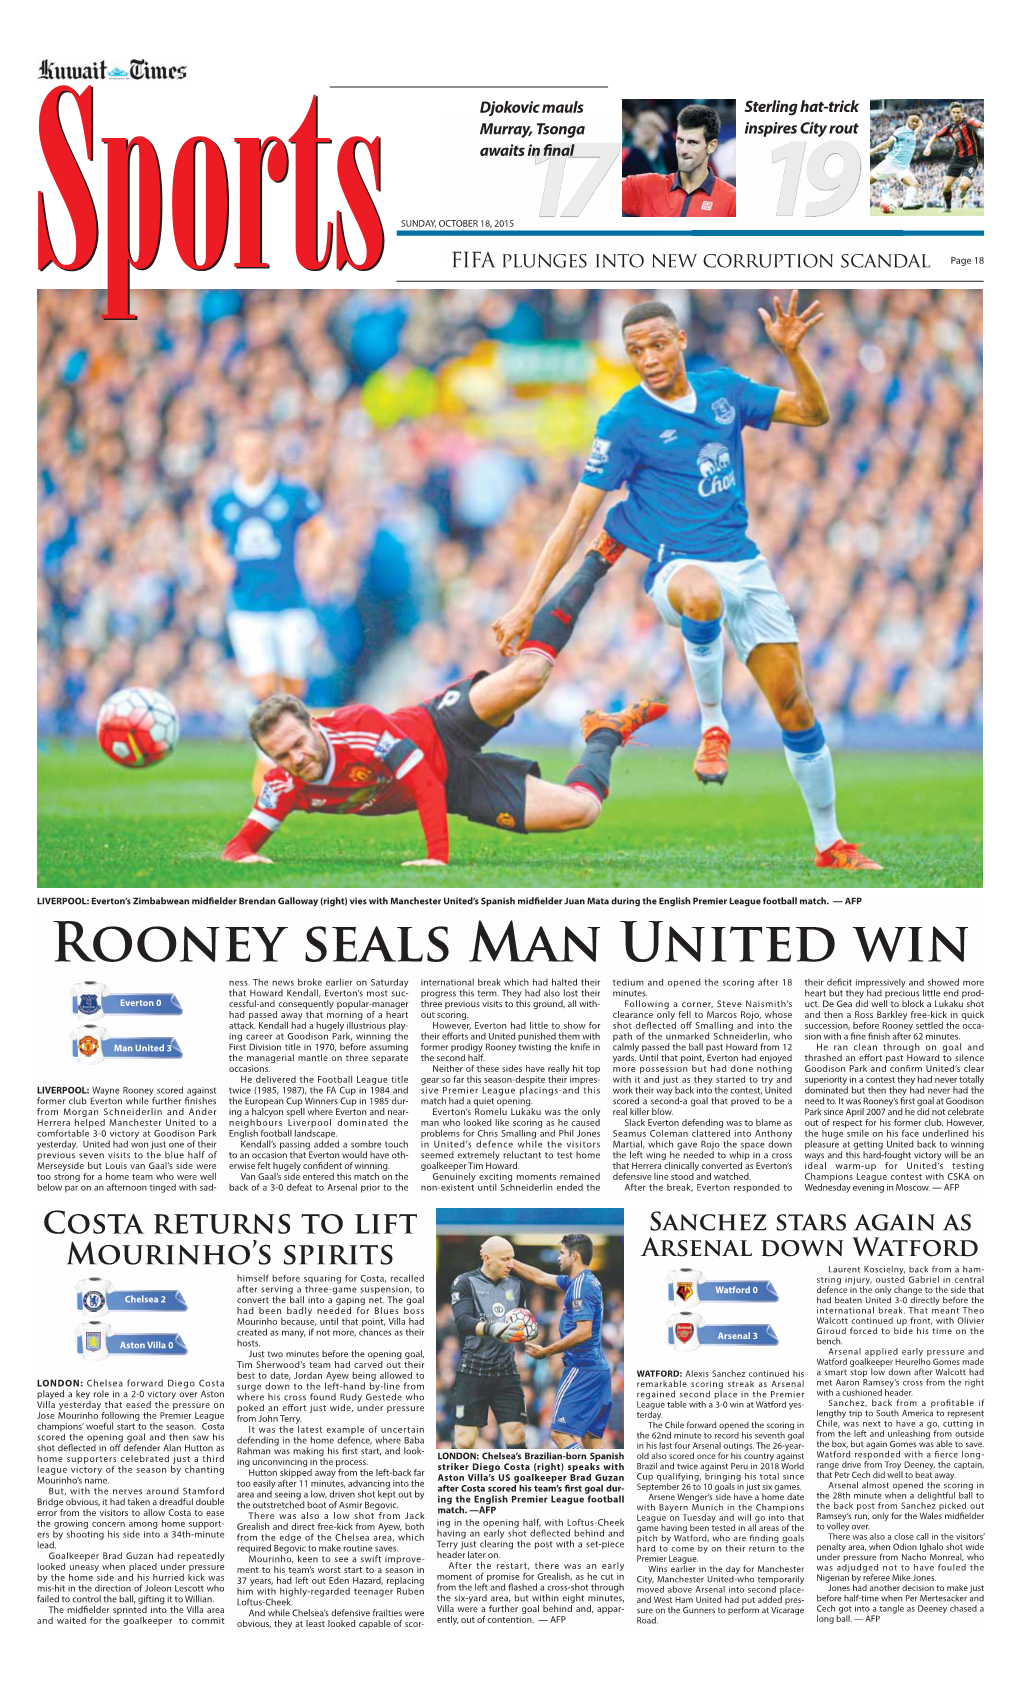 Rooney Seals Man United Win